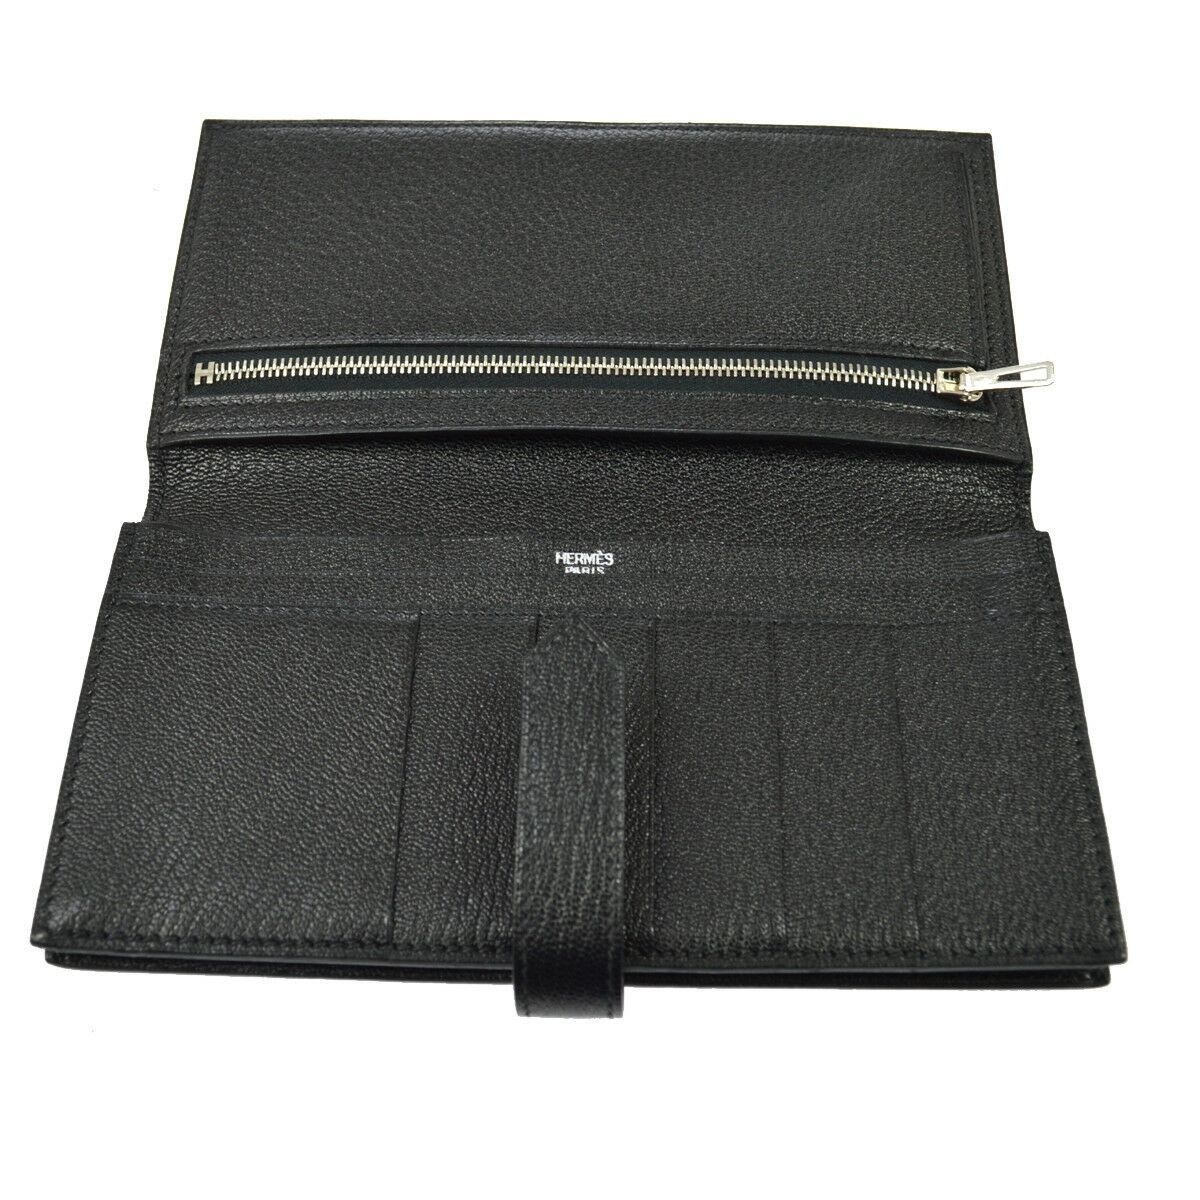 Hermes Black Leather Palladium 'H' Clutch Wallet in Box 1